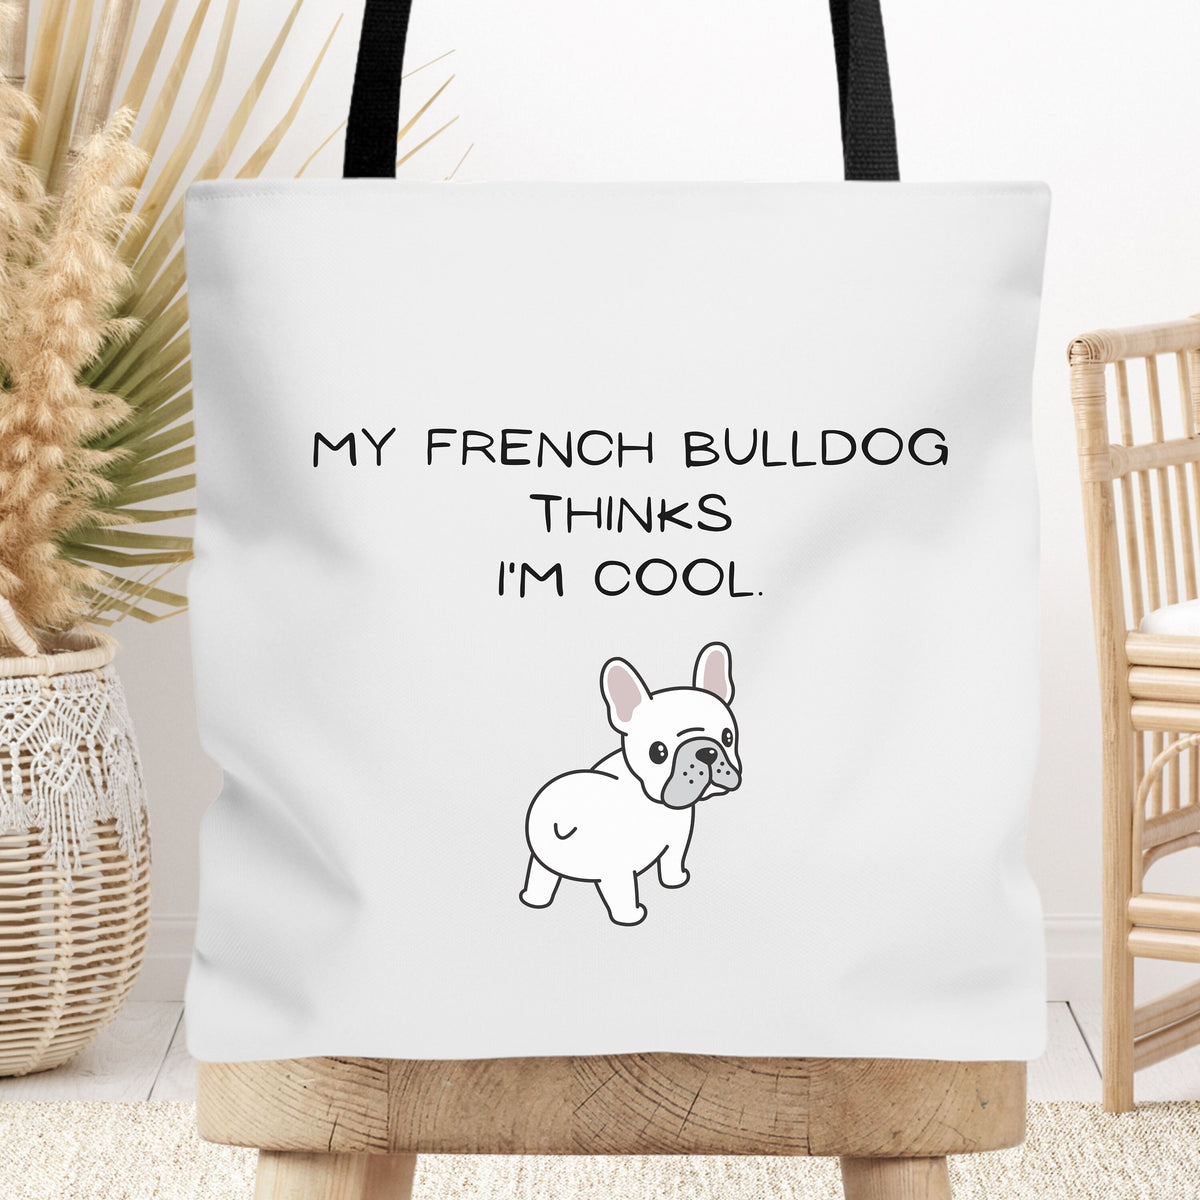 My French Bulldog Thinks I'm Cool Tote Bag, Dog Mama Tote Bag, Beach Bag, Pool Bag, Dog Lover Tote Bag, Book Carrying Bag, Shopping Bag